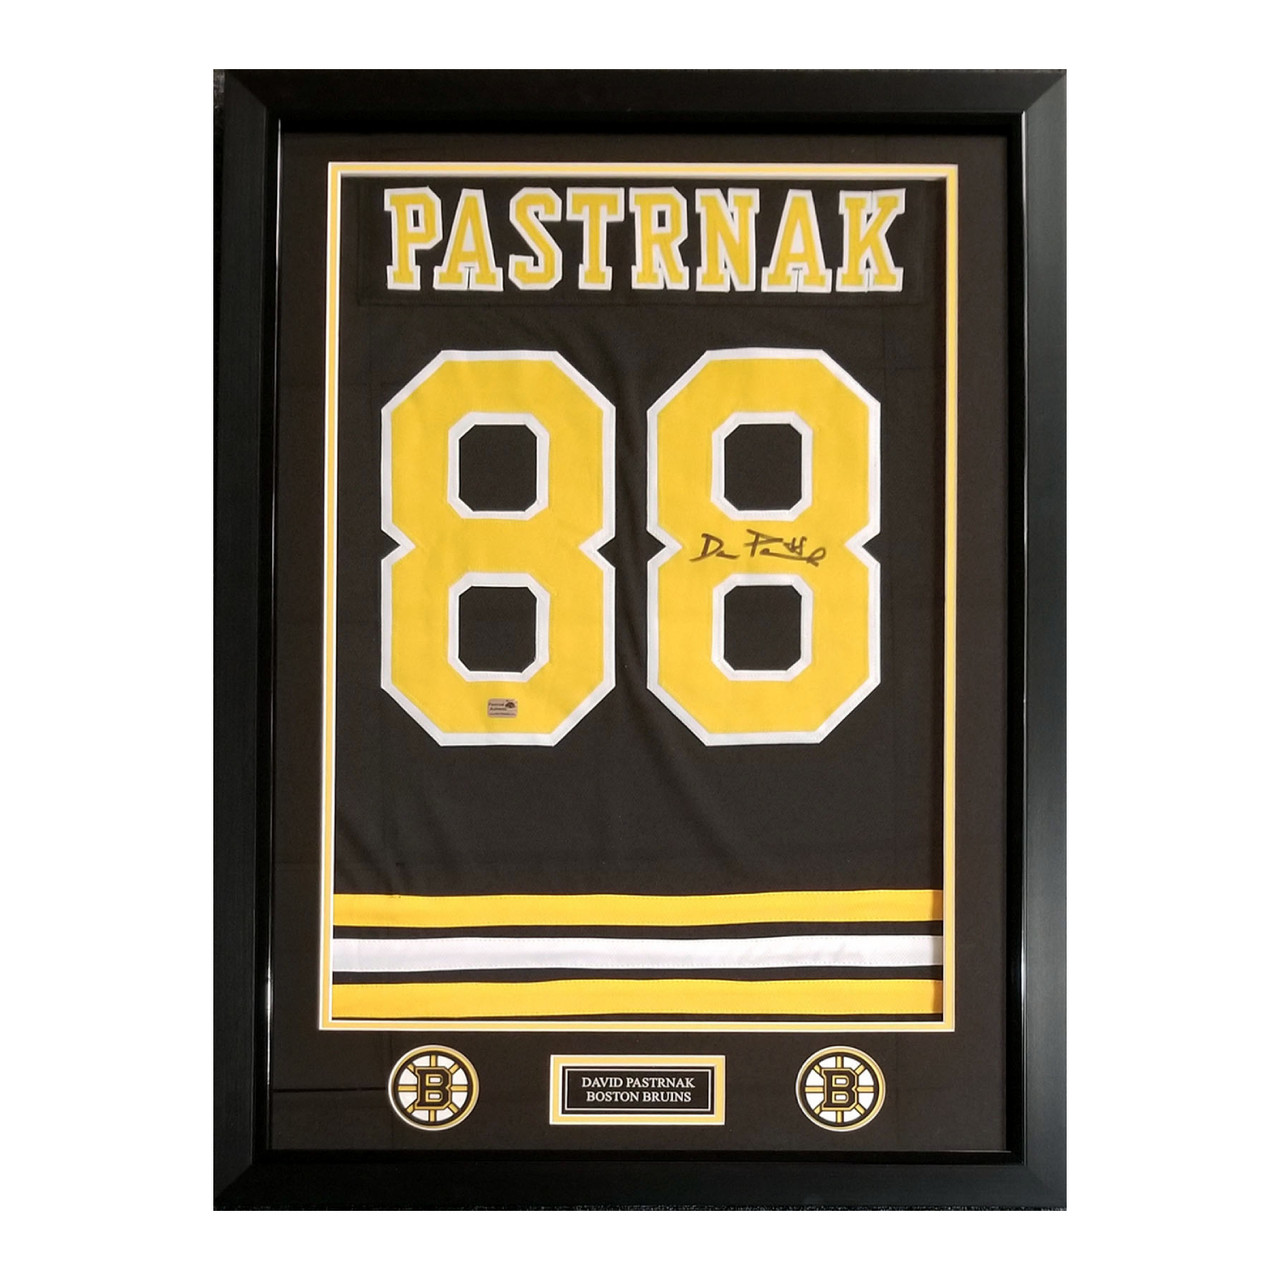 David Pastrnak Boston Bruins Baseball Jersey by KybershopFashion on  DeviantArt